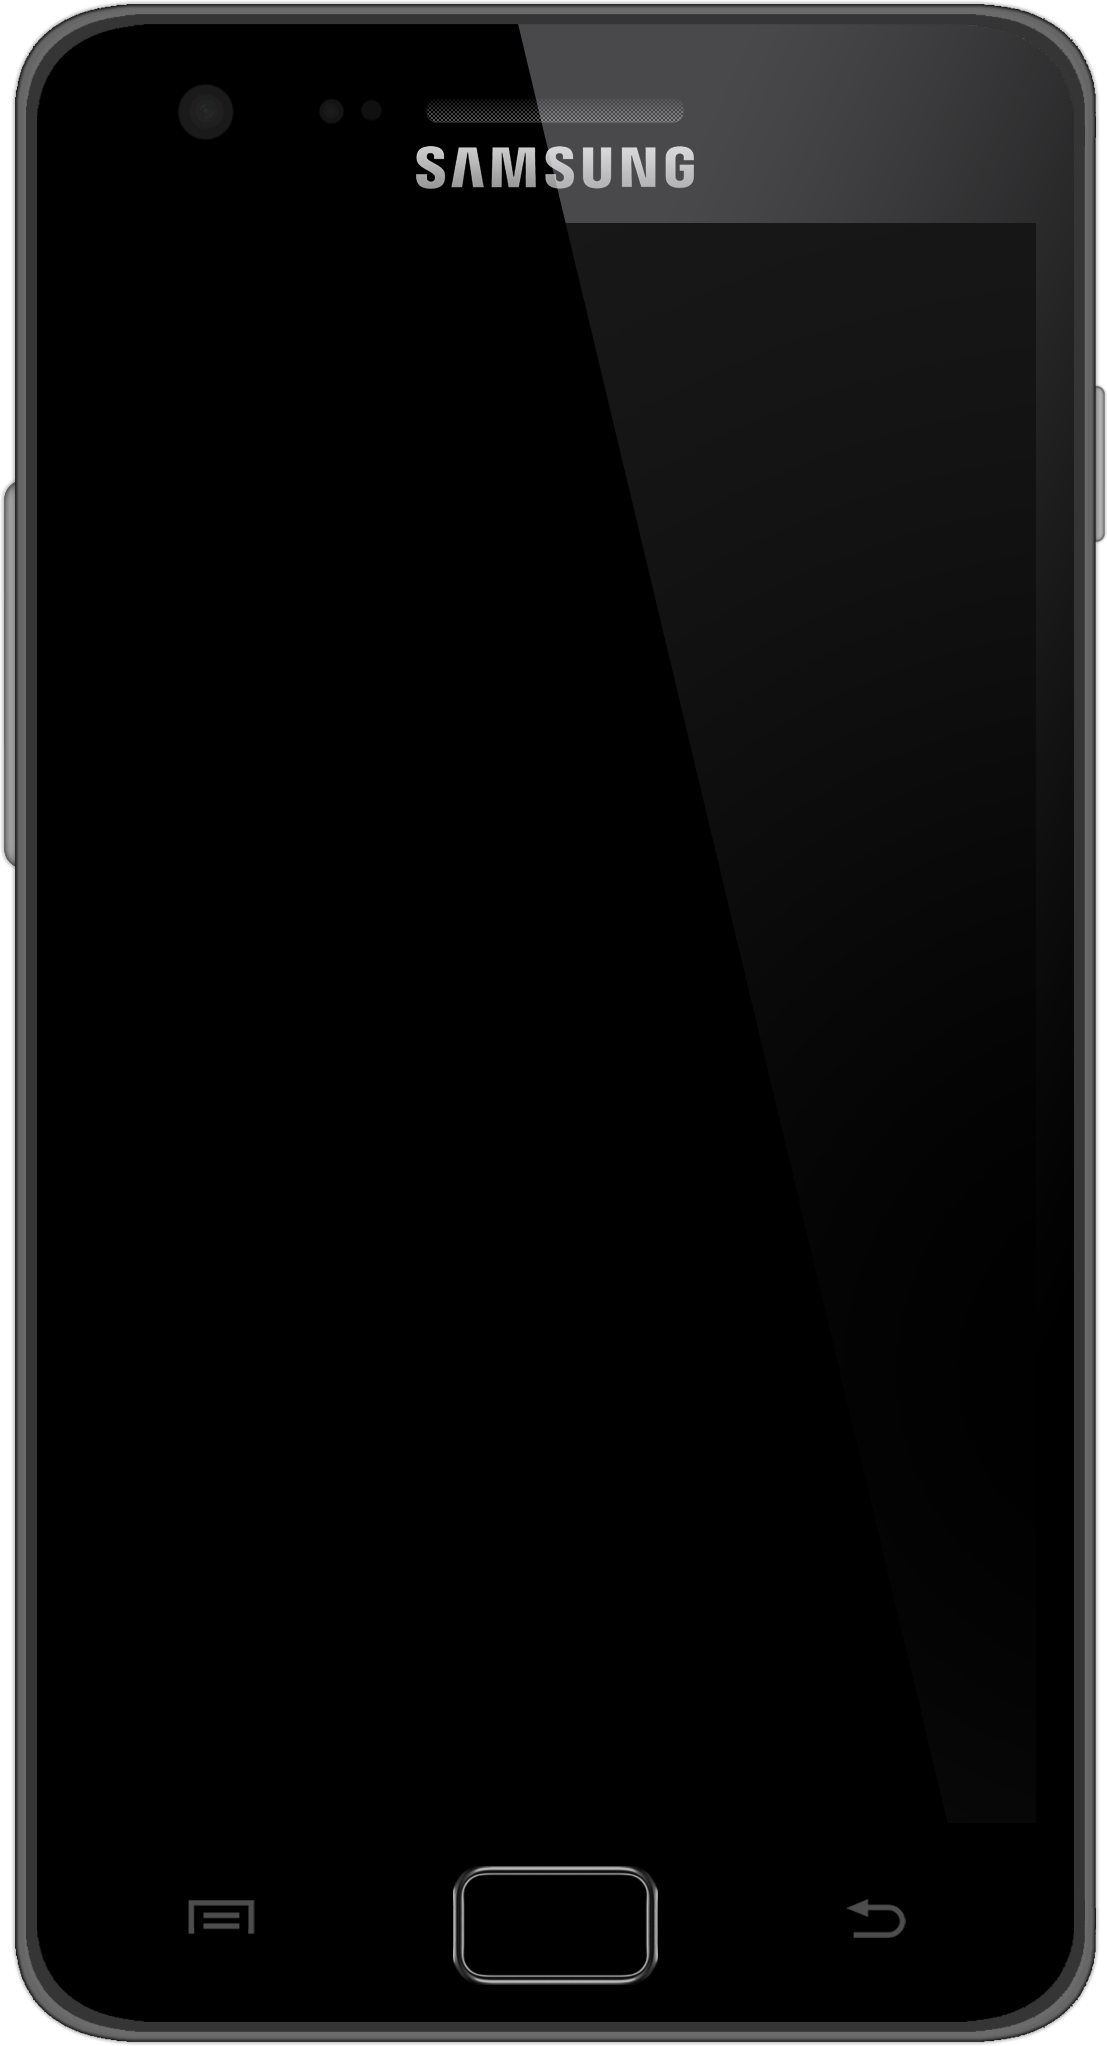 Samsung Galaxy S II - Wikipedia